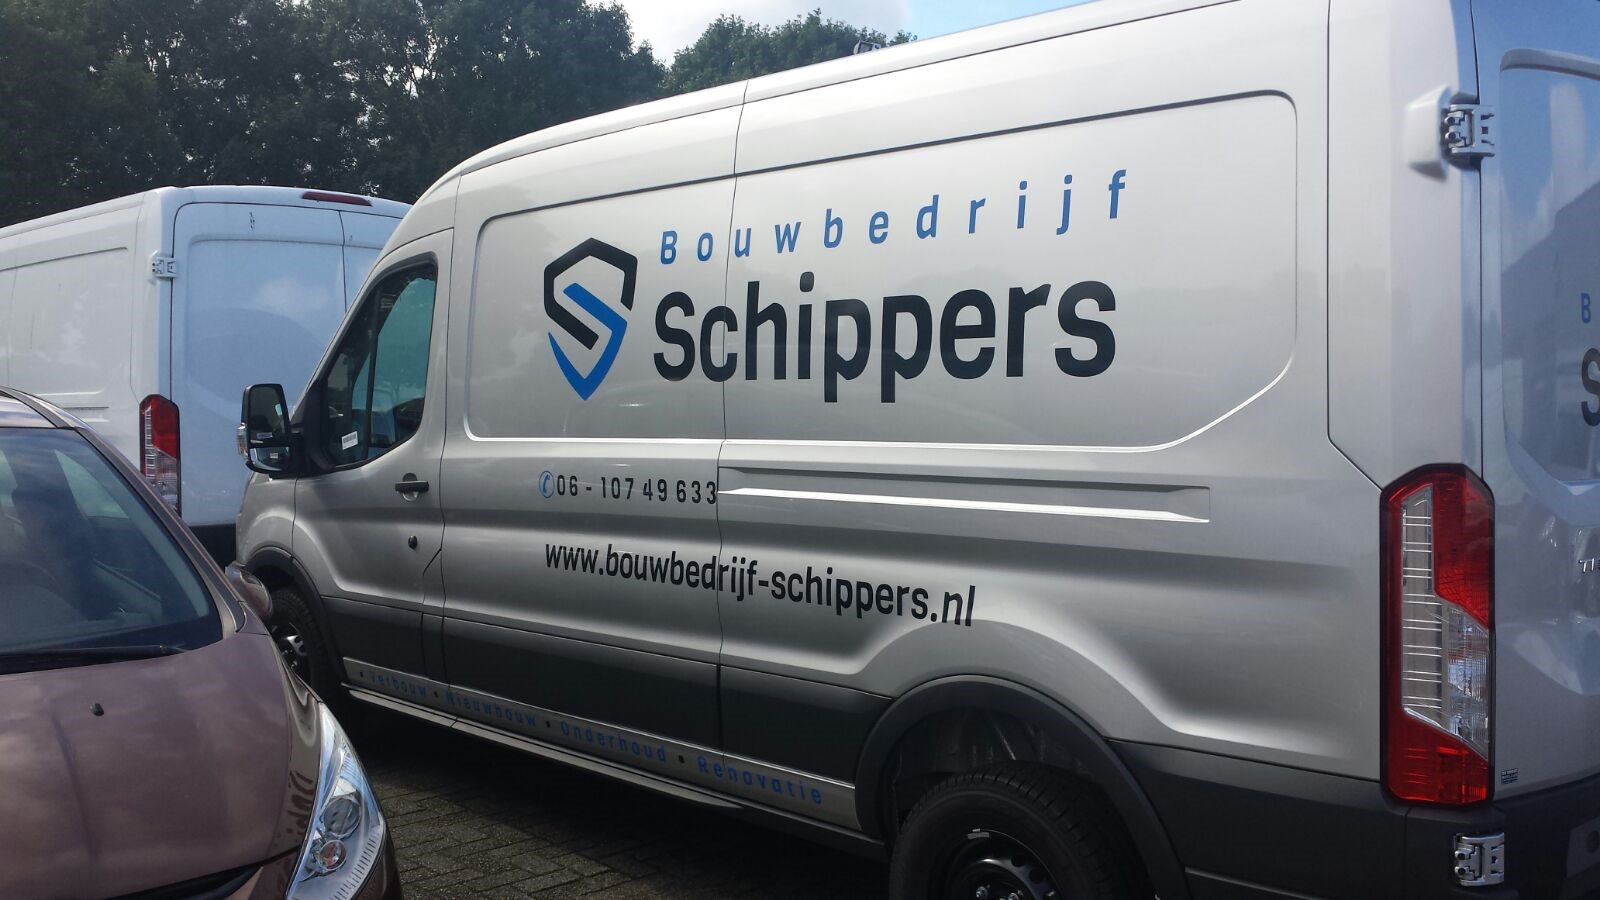 Contact Bouwbedrijf schippers Arnhem